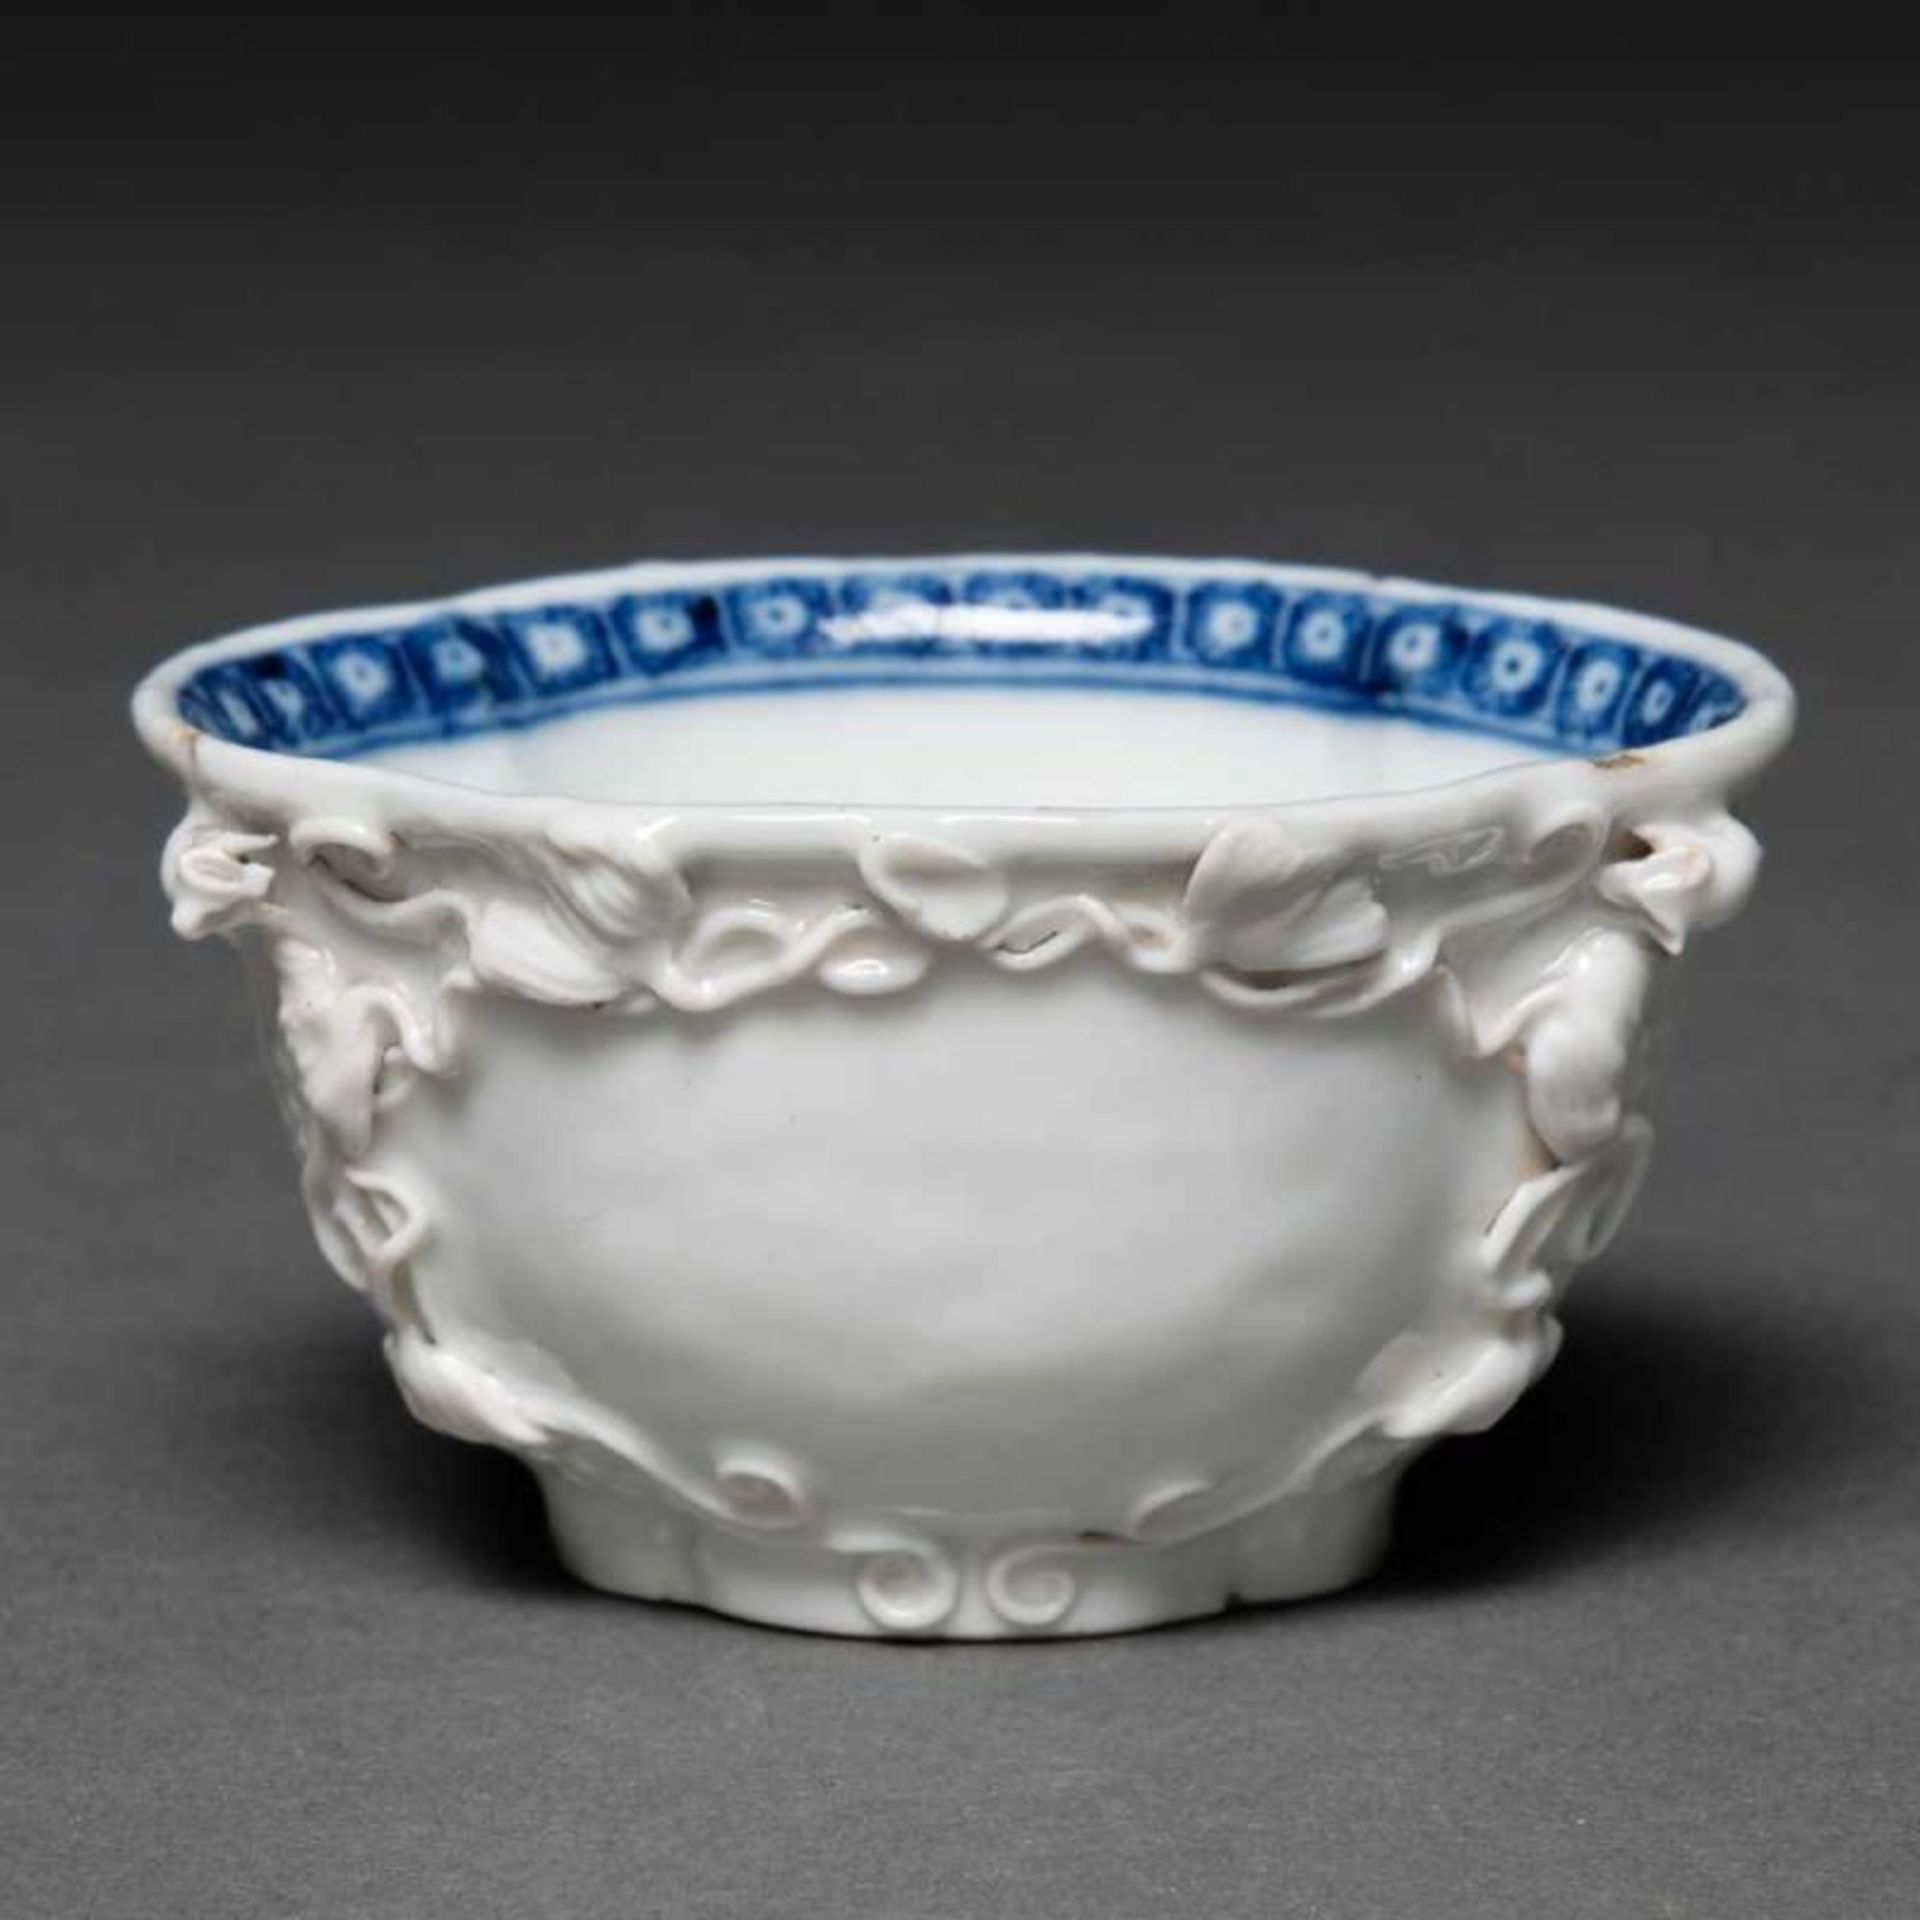 Tazita en porcelana china de color blanco con cenefa interior en azul. Siglo XVIIIDecoración de